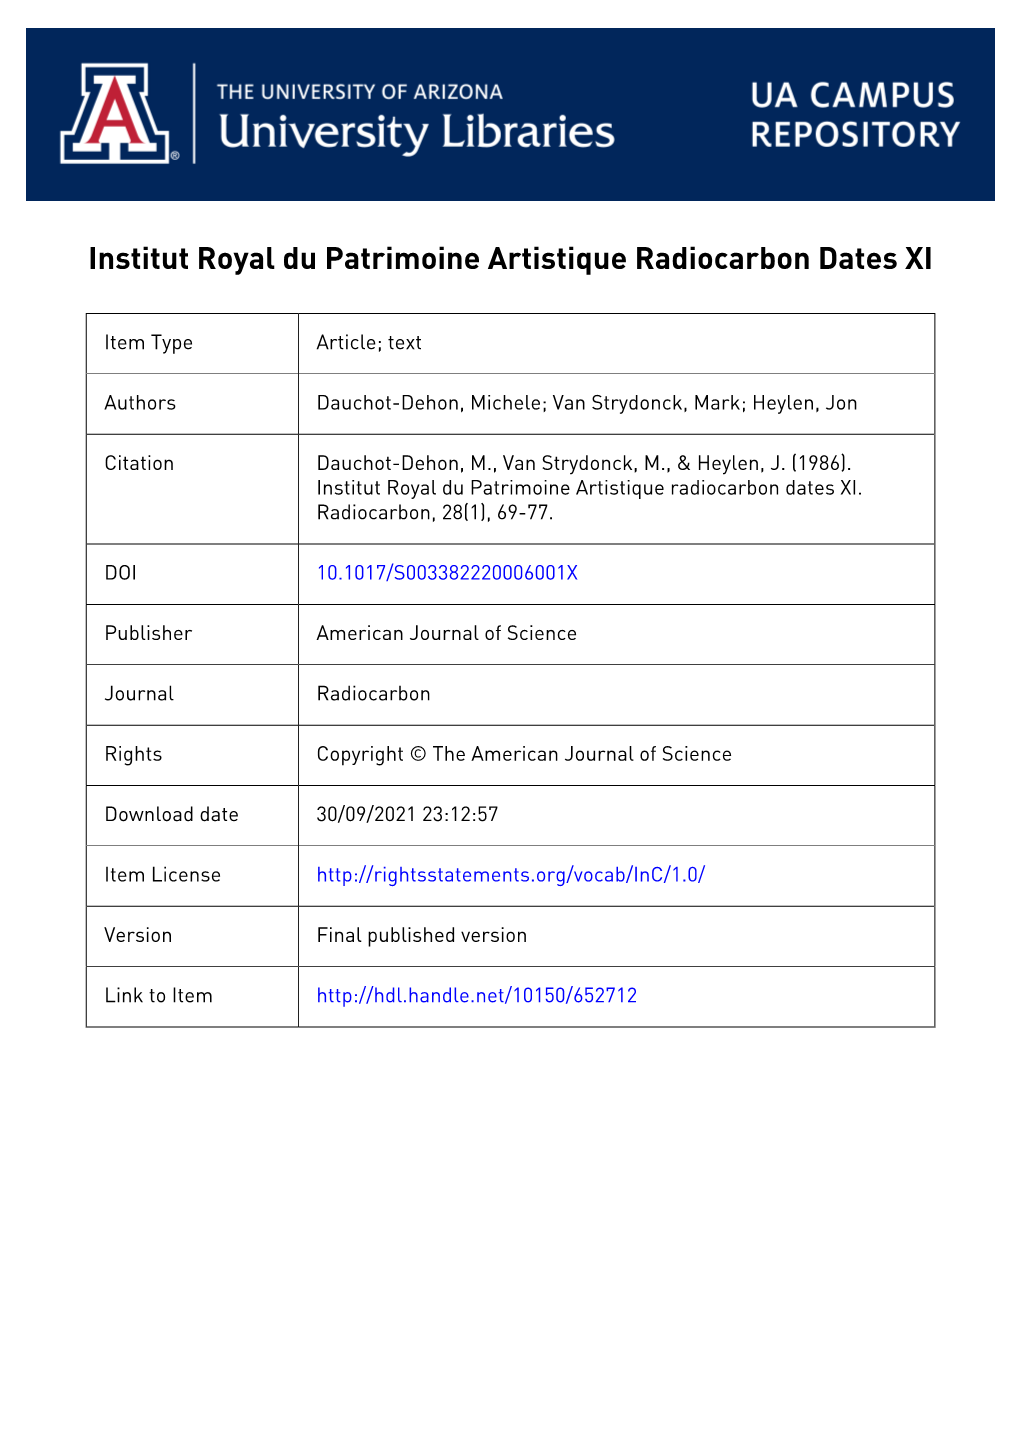 Institut Royal Du Patrimoine Artistique Radiocarbon Dates XI